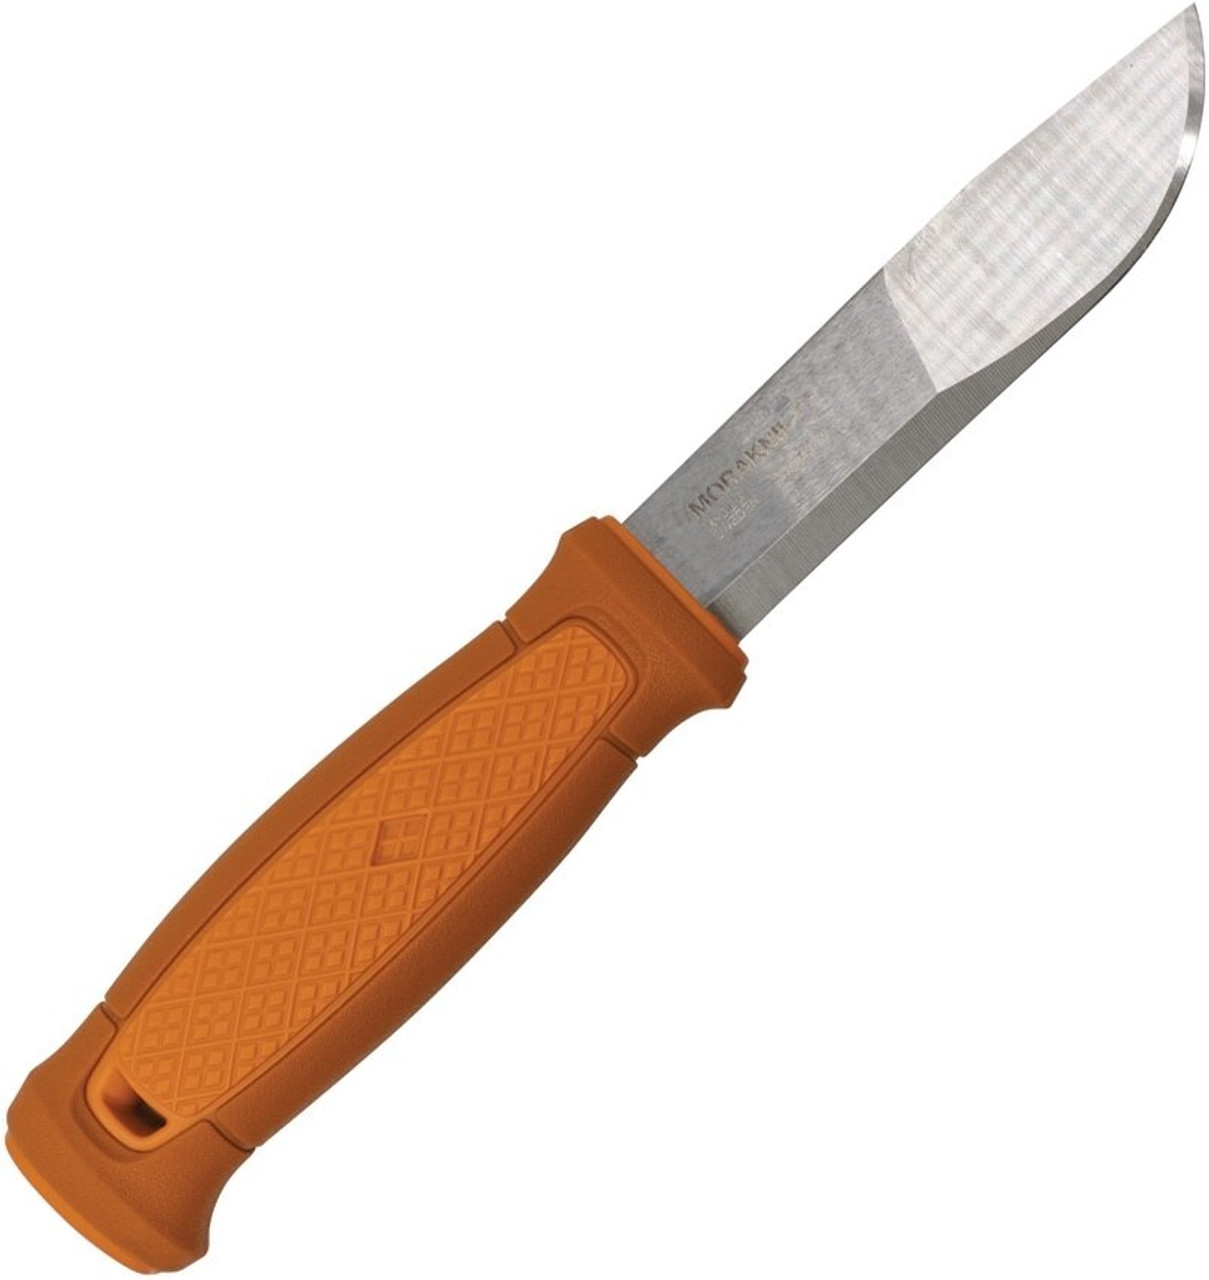 MoraKniv Kansbol Utility Knife with Sheath